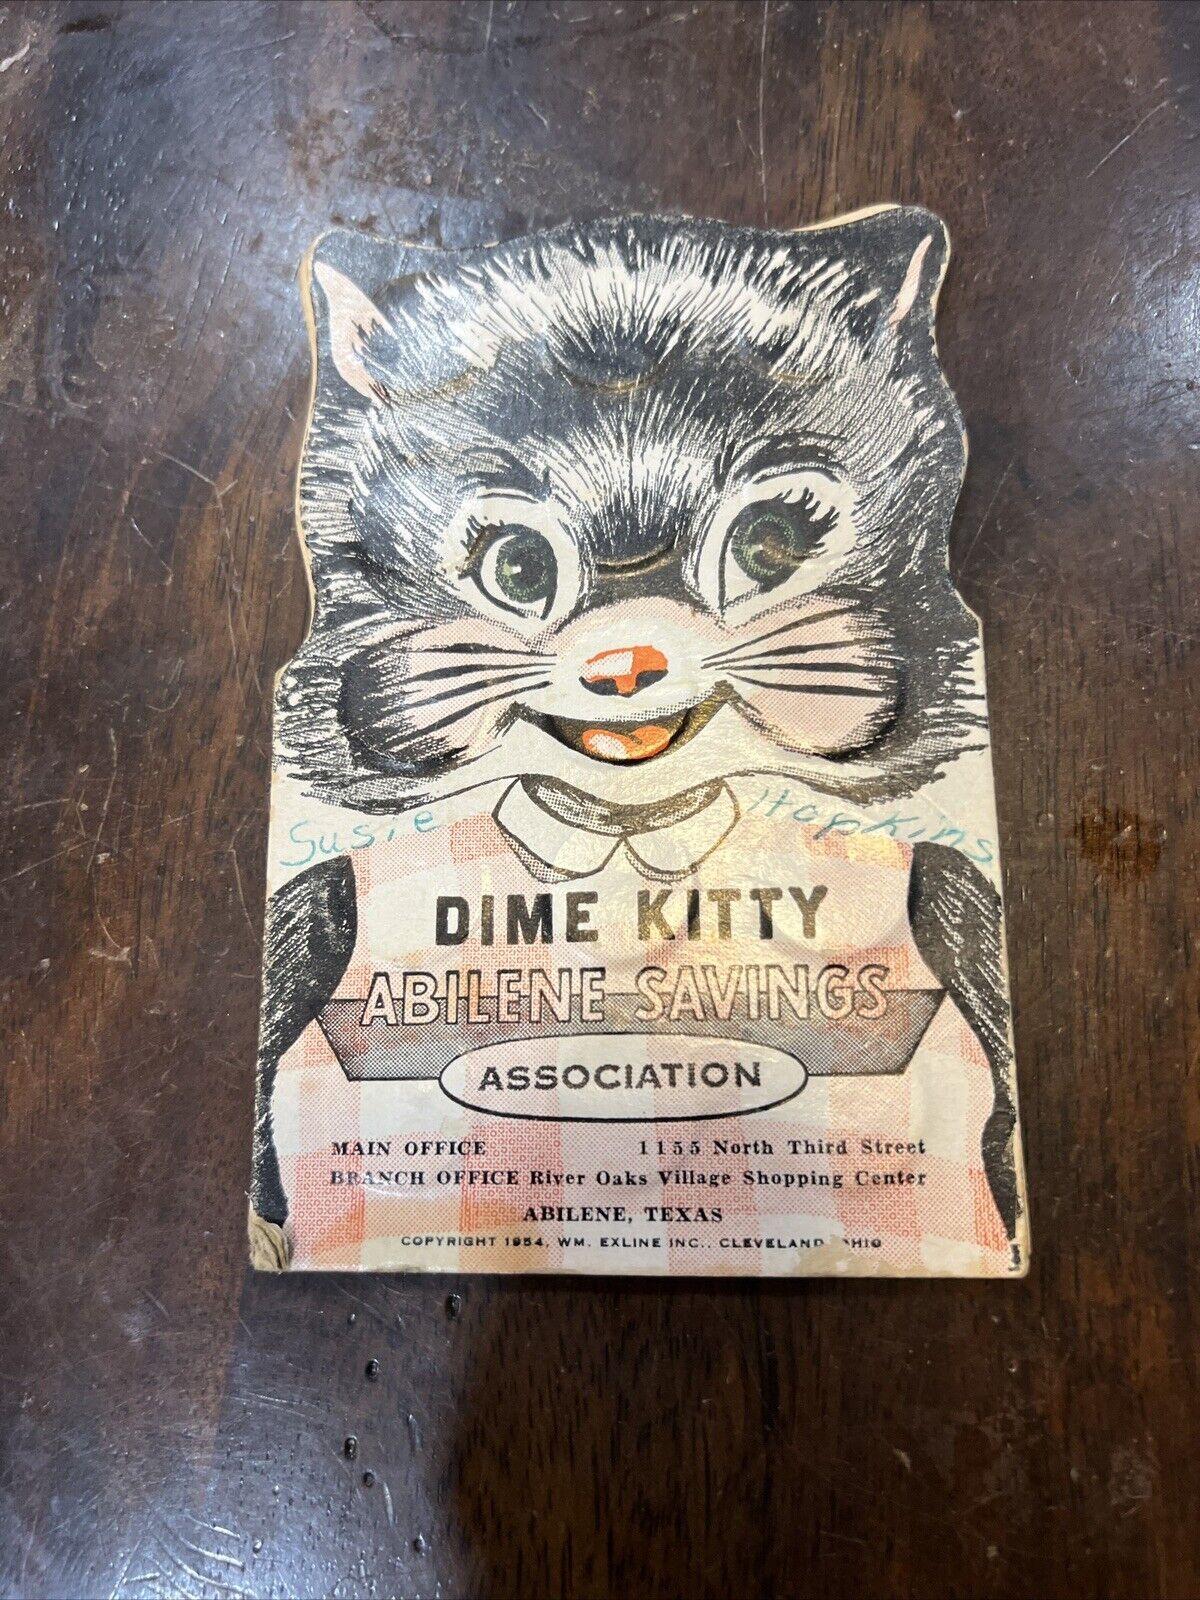 VTG 1954 DIME KITTY ABILENE SAVINGS ASSOCIATION. $3 In Dimes Included. GOOD